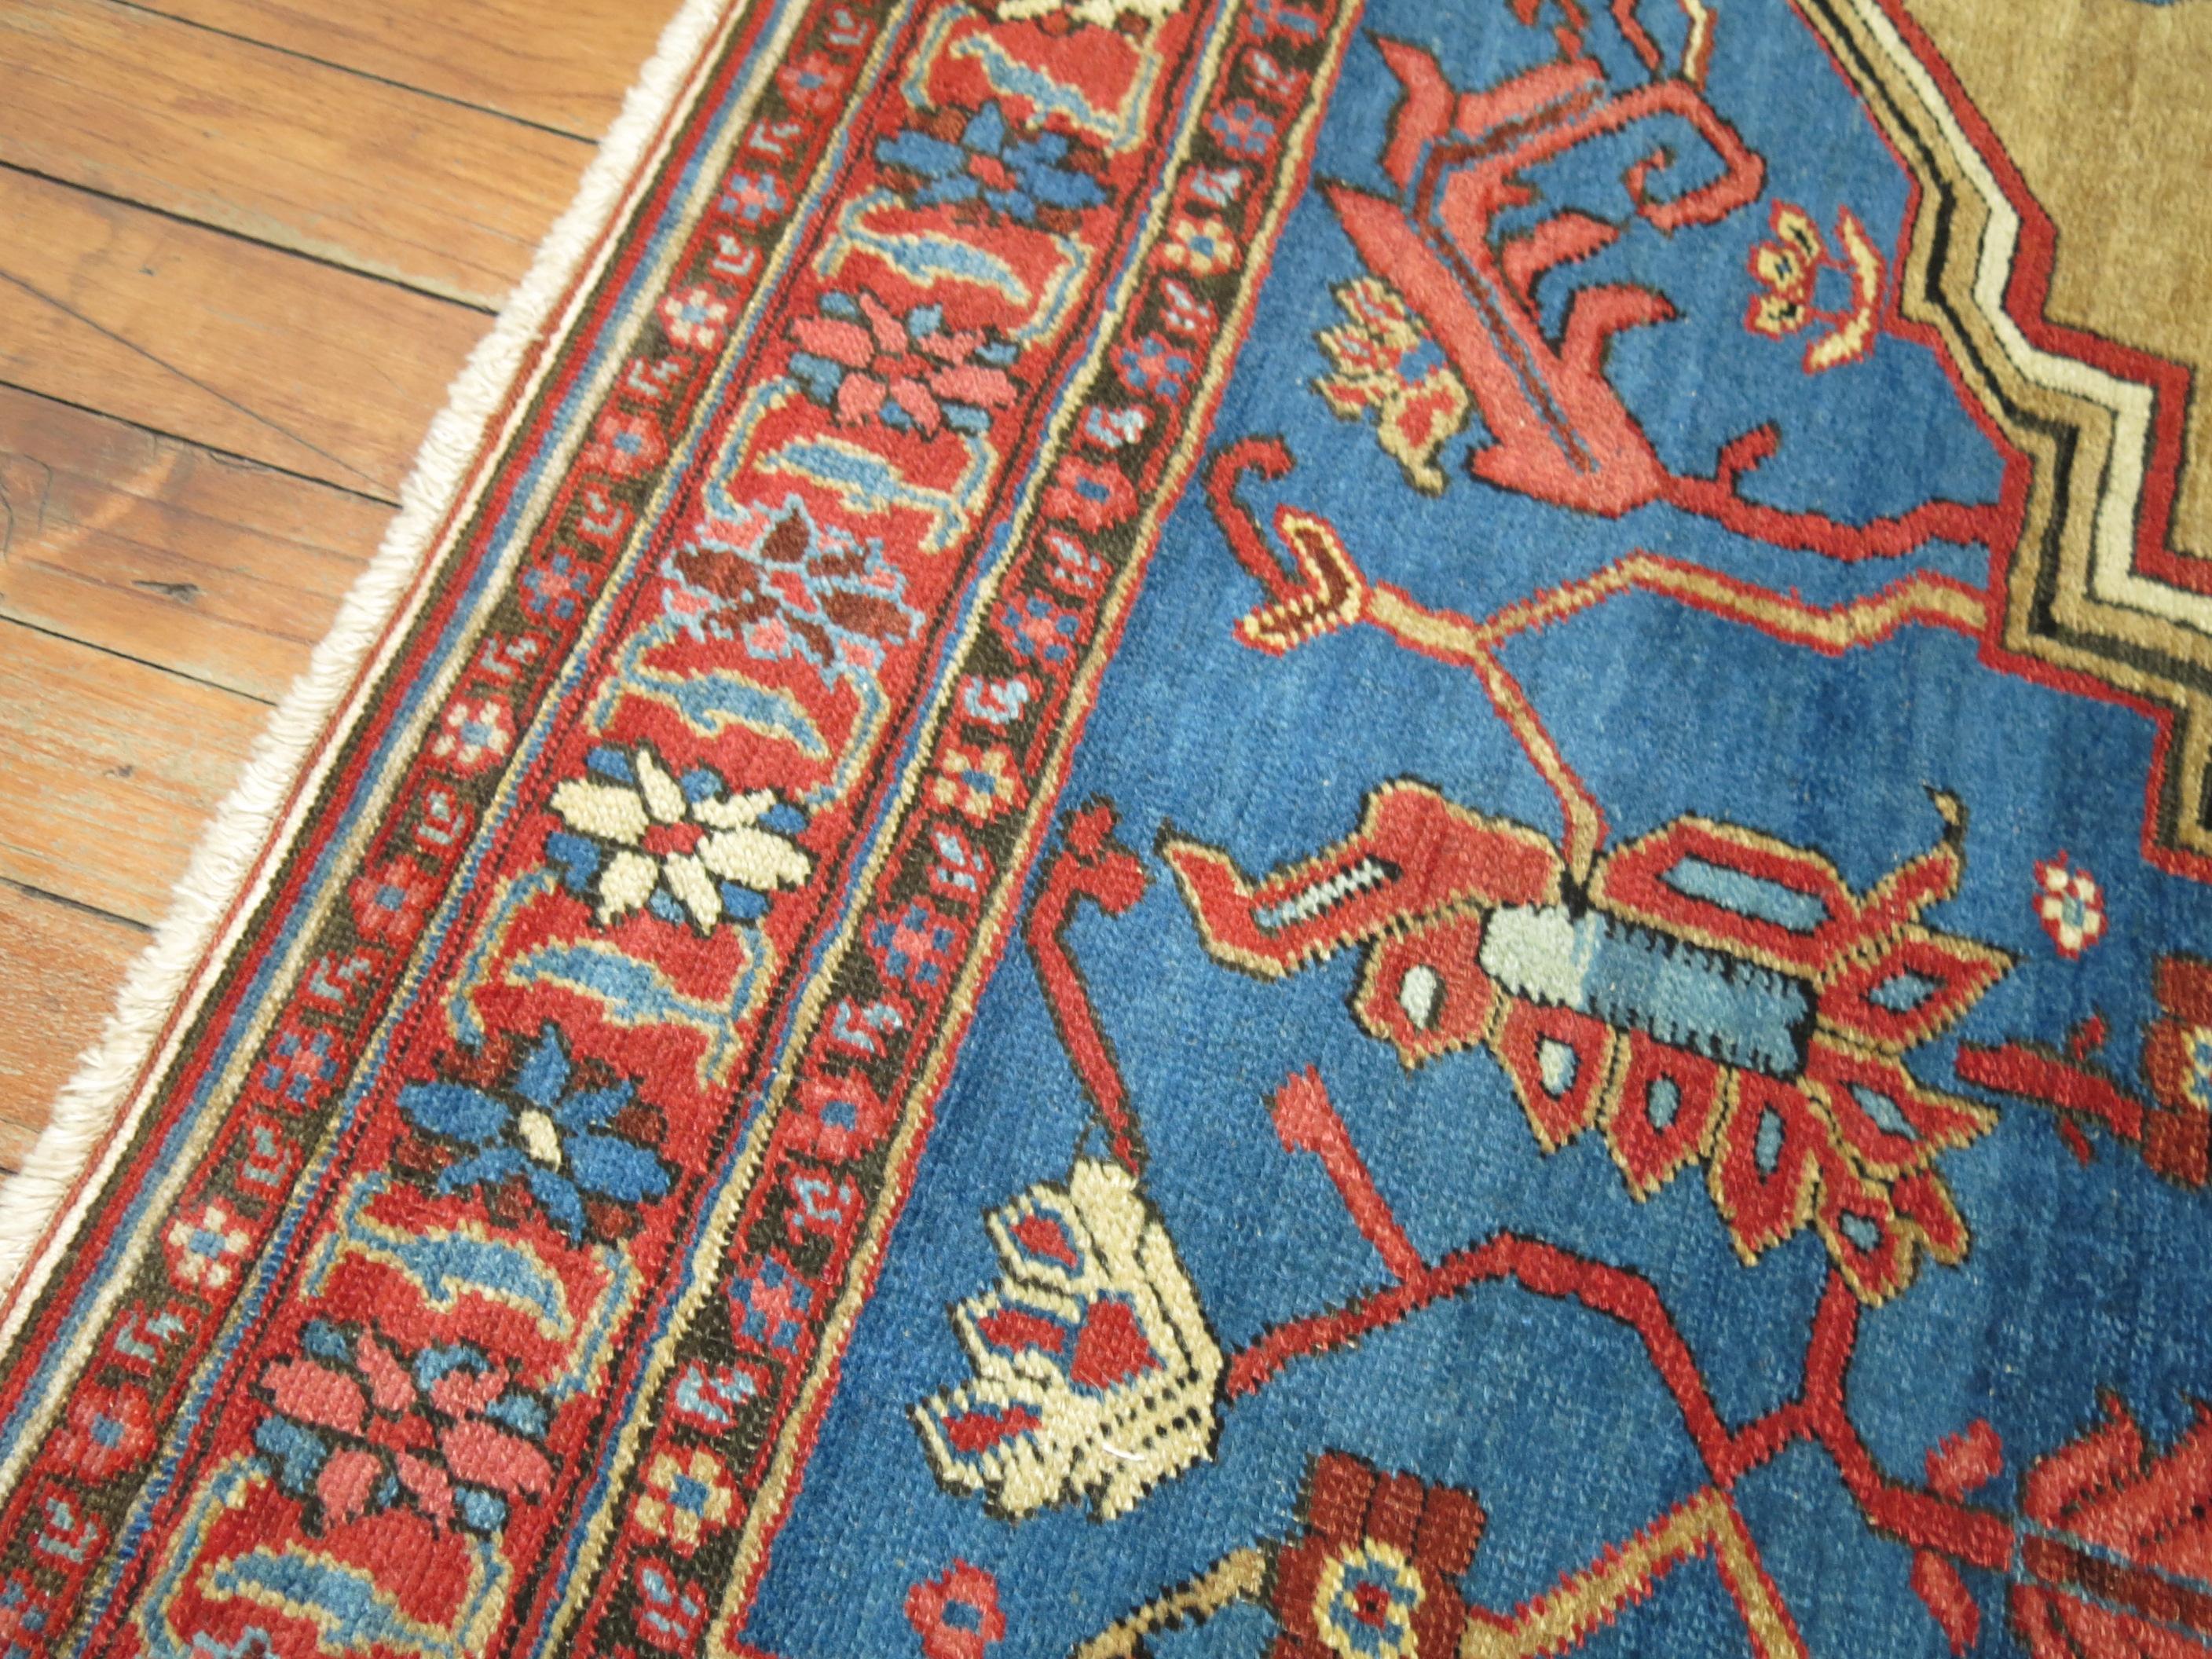 bakshaish rugs for sale